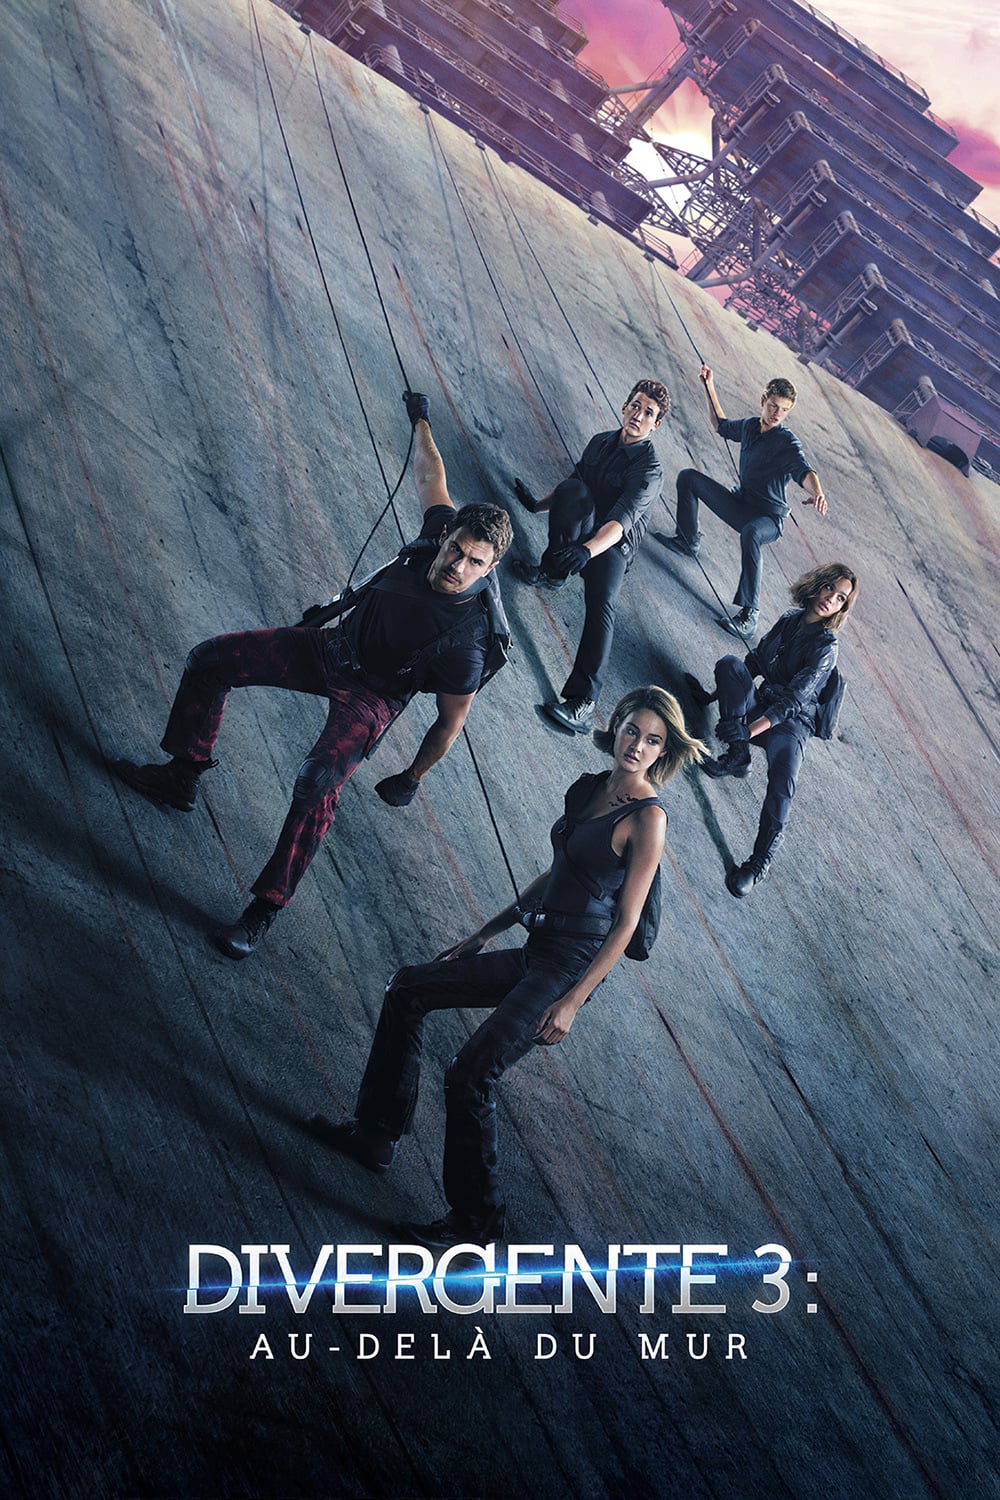 Affiche du film "Divergente 3 : Au-delà du mur"